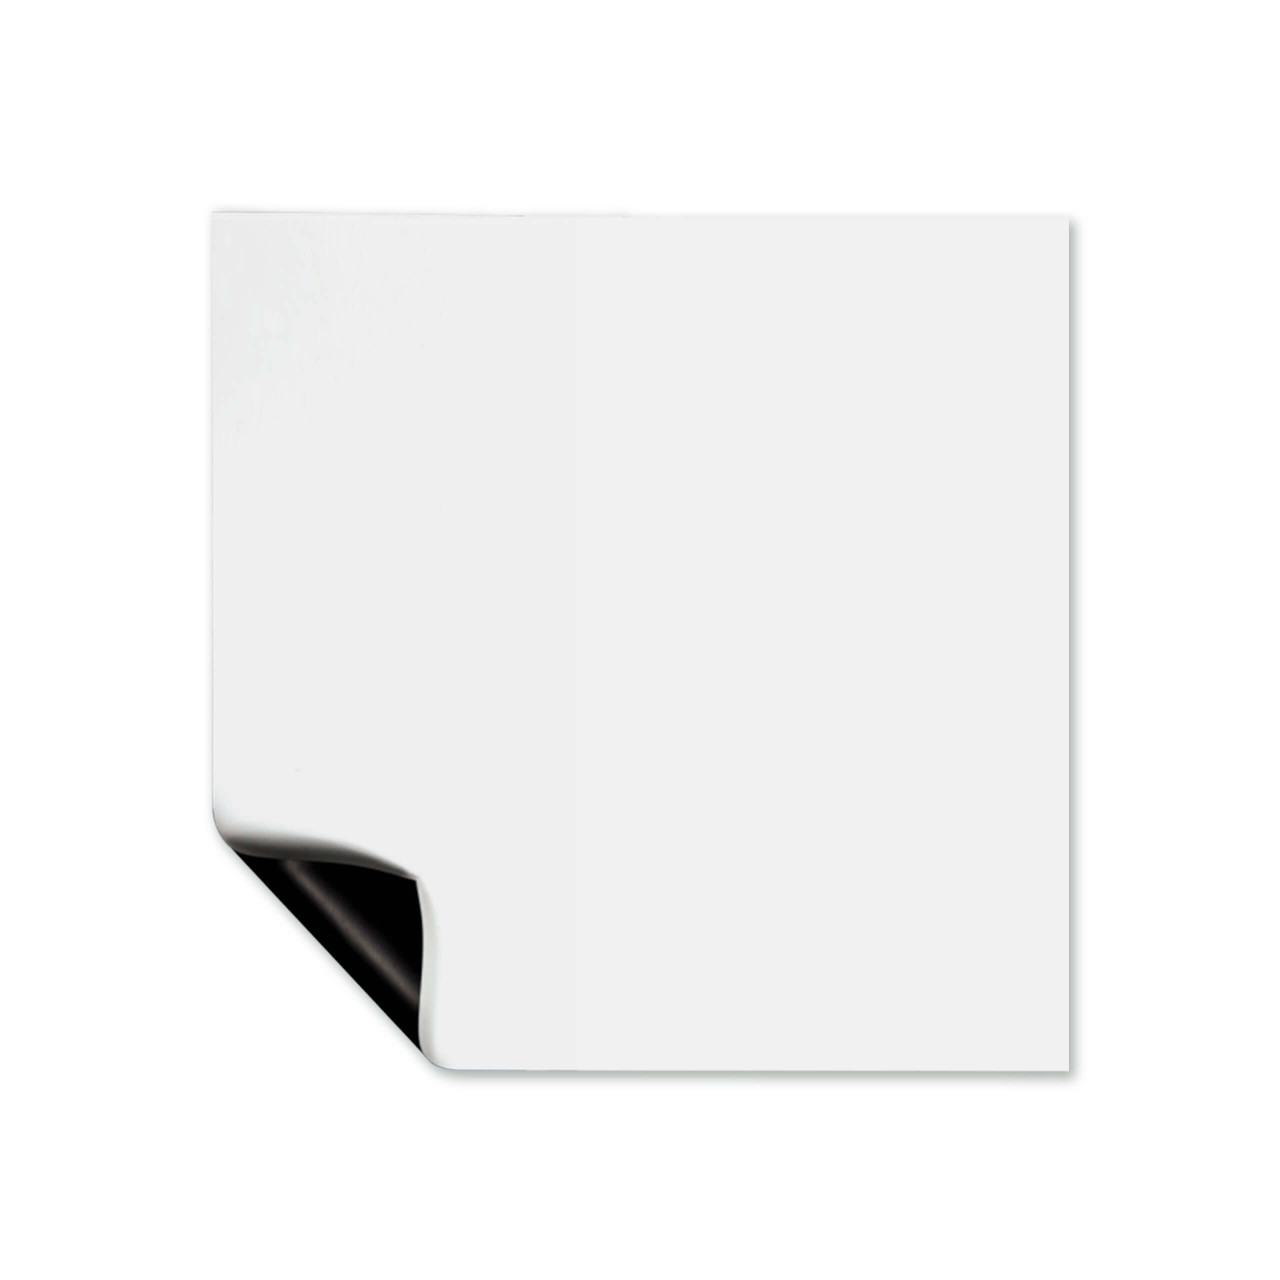 18 x 24 Black Vinyl Sign Blank Magnets - Discount Magnet